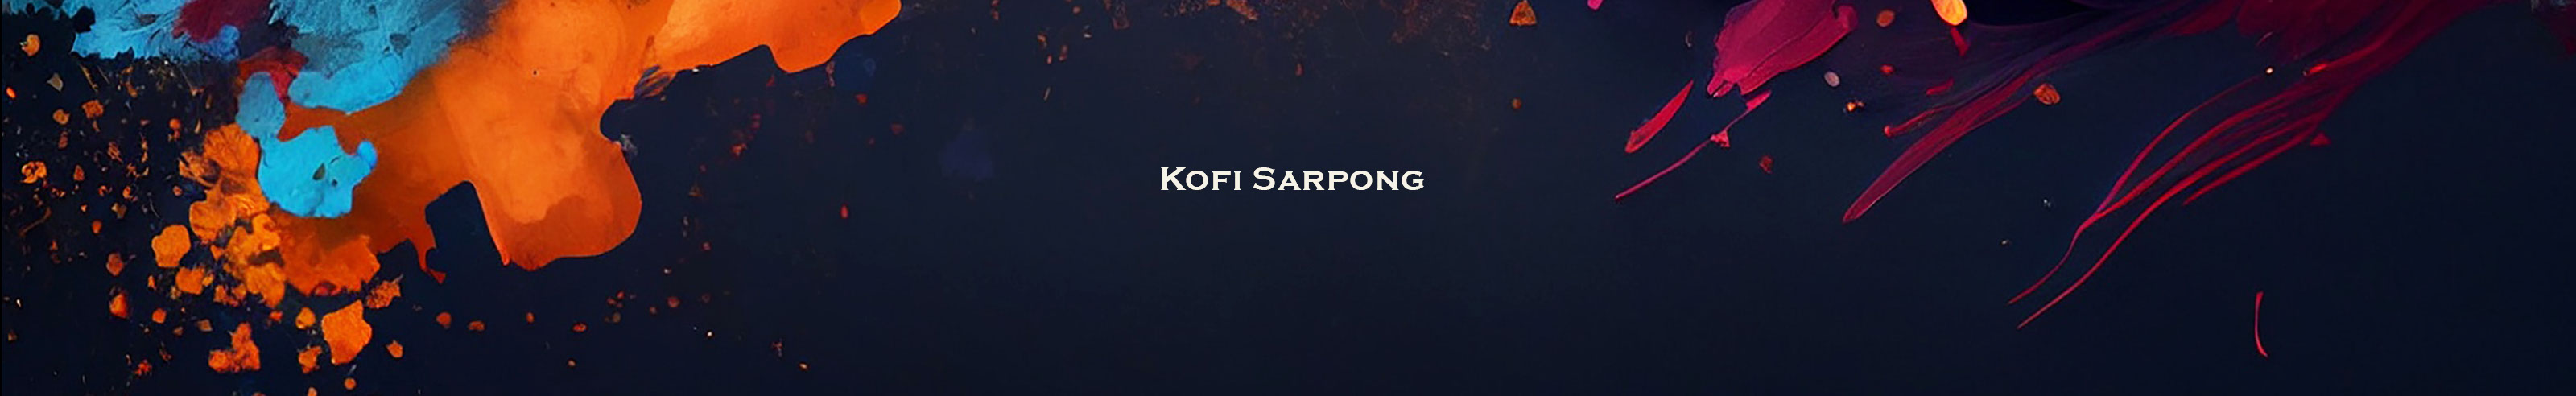 Kofi Sarpong's profile banner